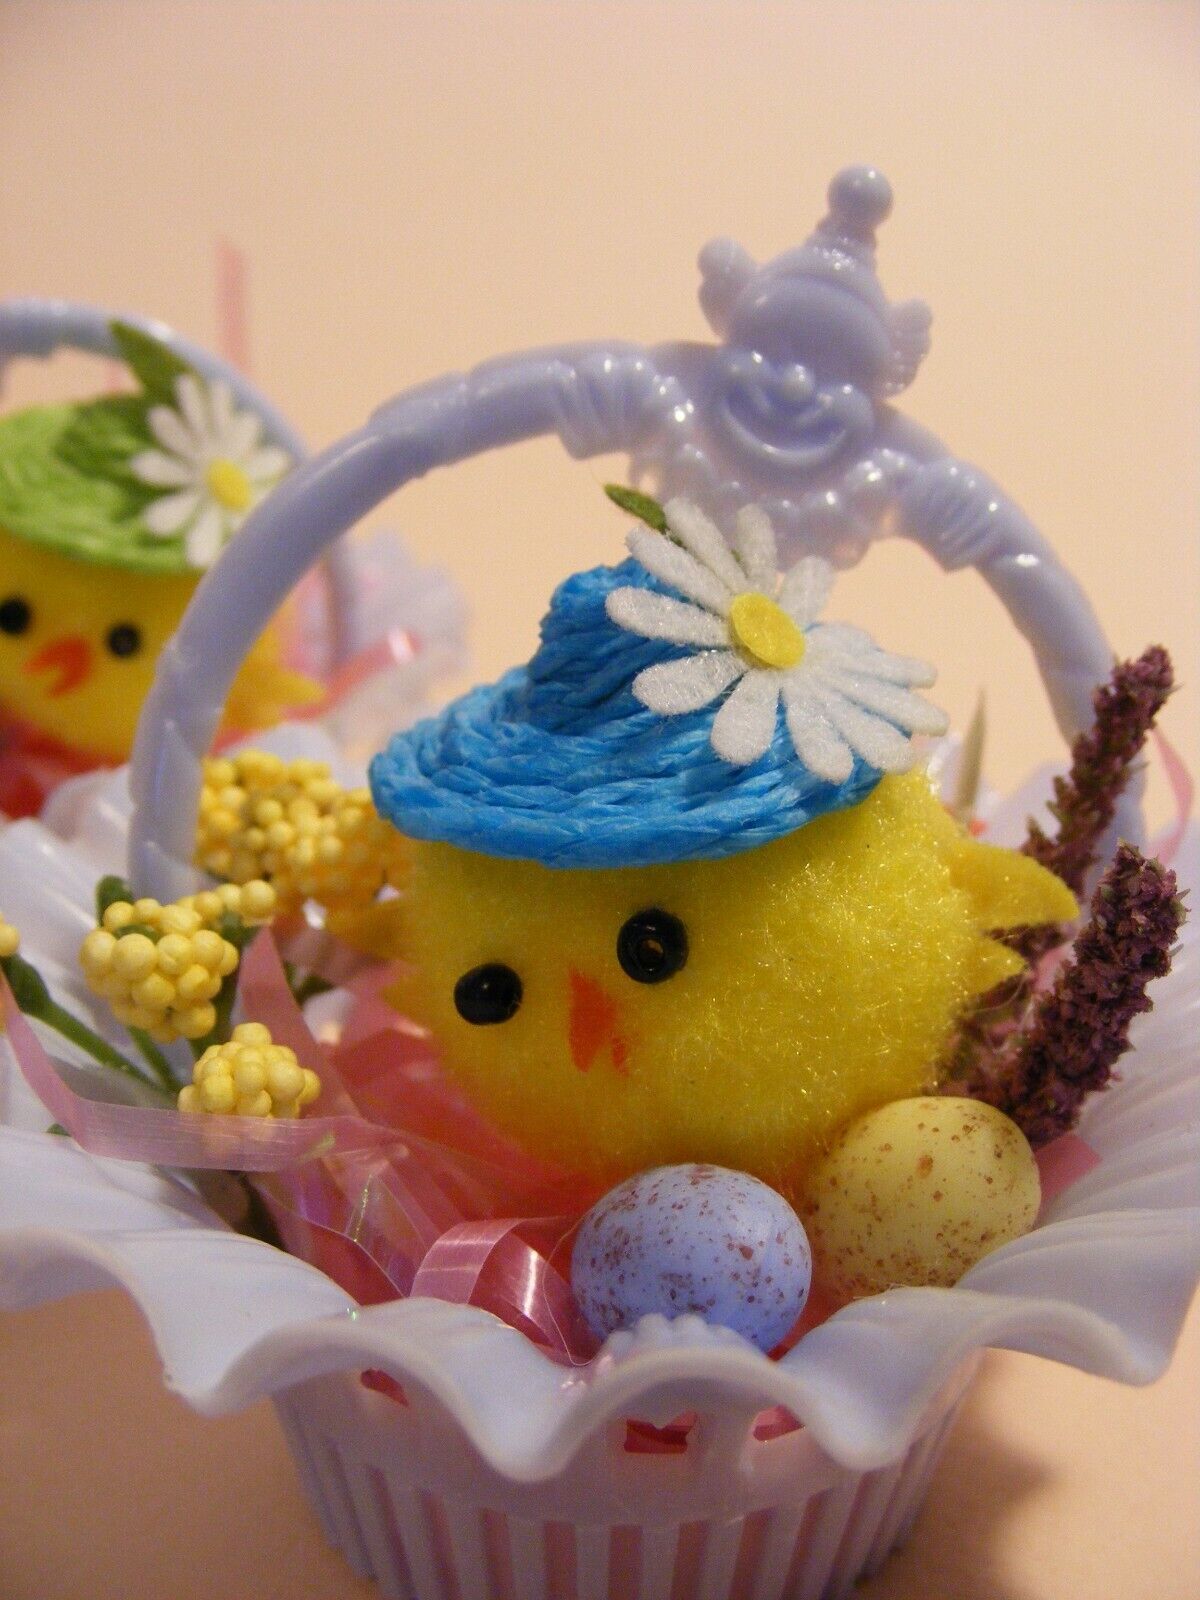 Vintage Easter nutcup arrangements bunnies chicks Без бренда - фотография #5